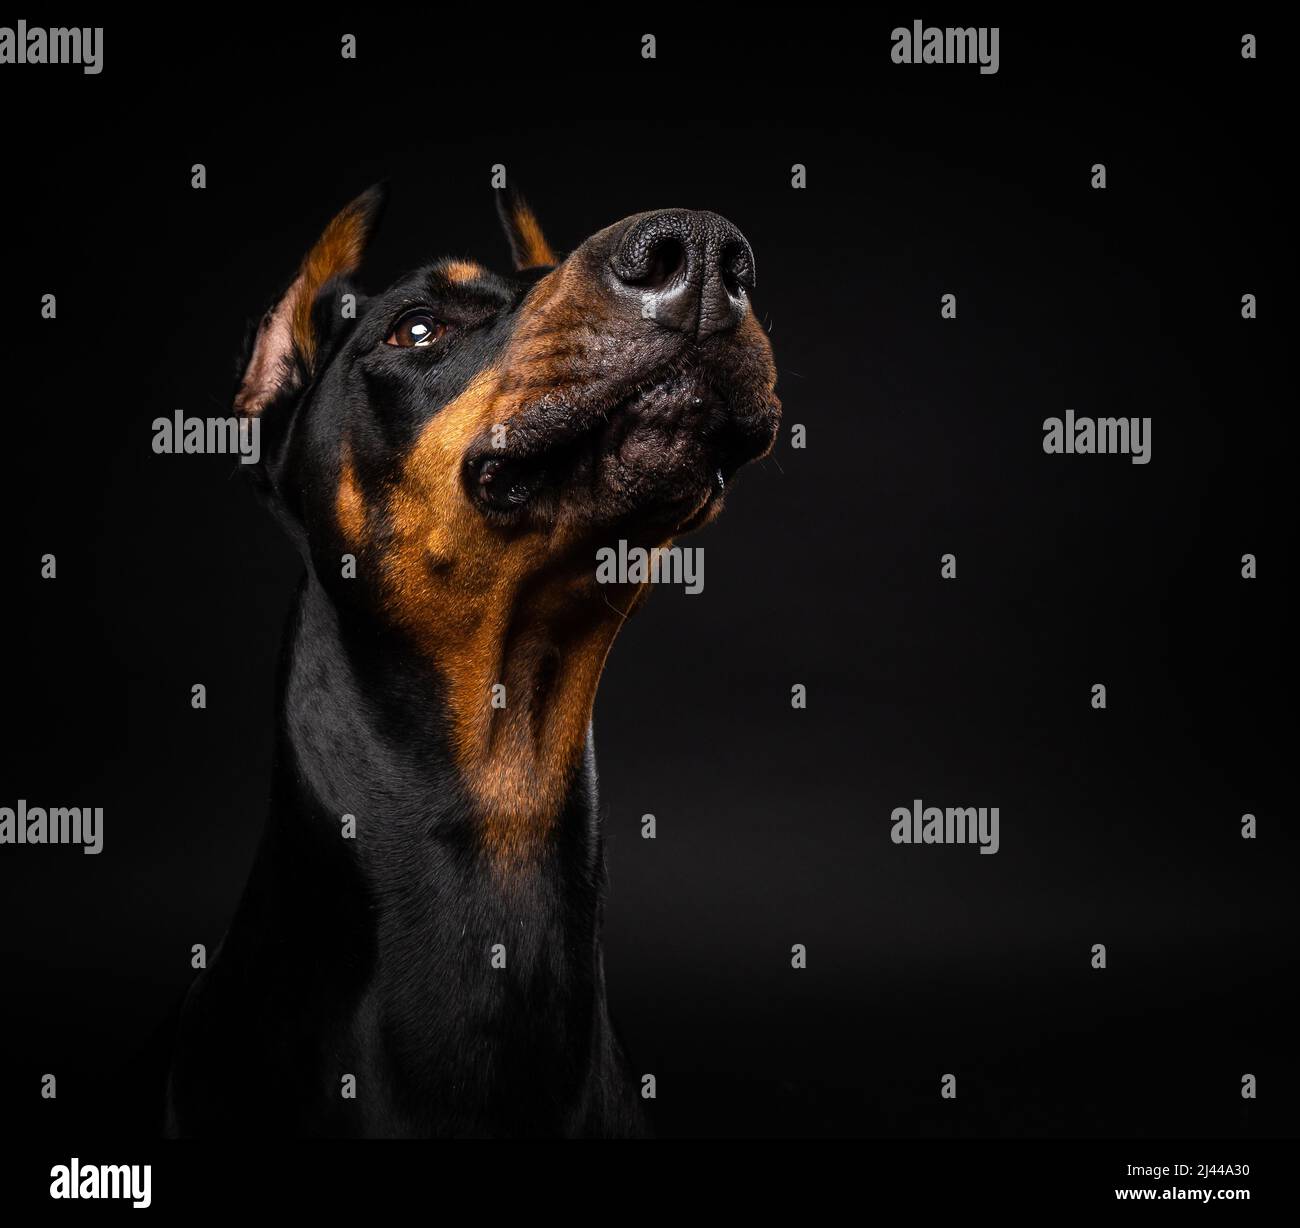 Portrait of a Doberman dog on an isolated black background. Studio shot, close-up. Stock Photo